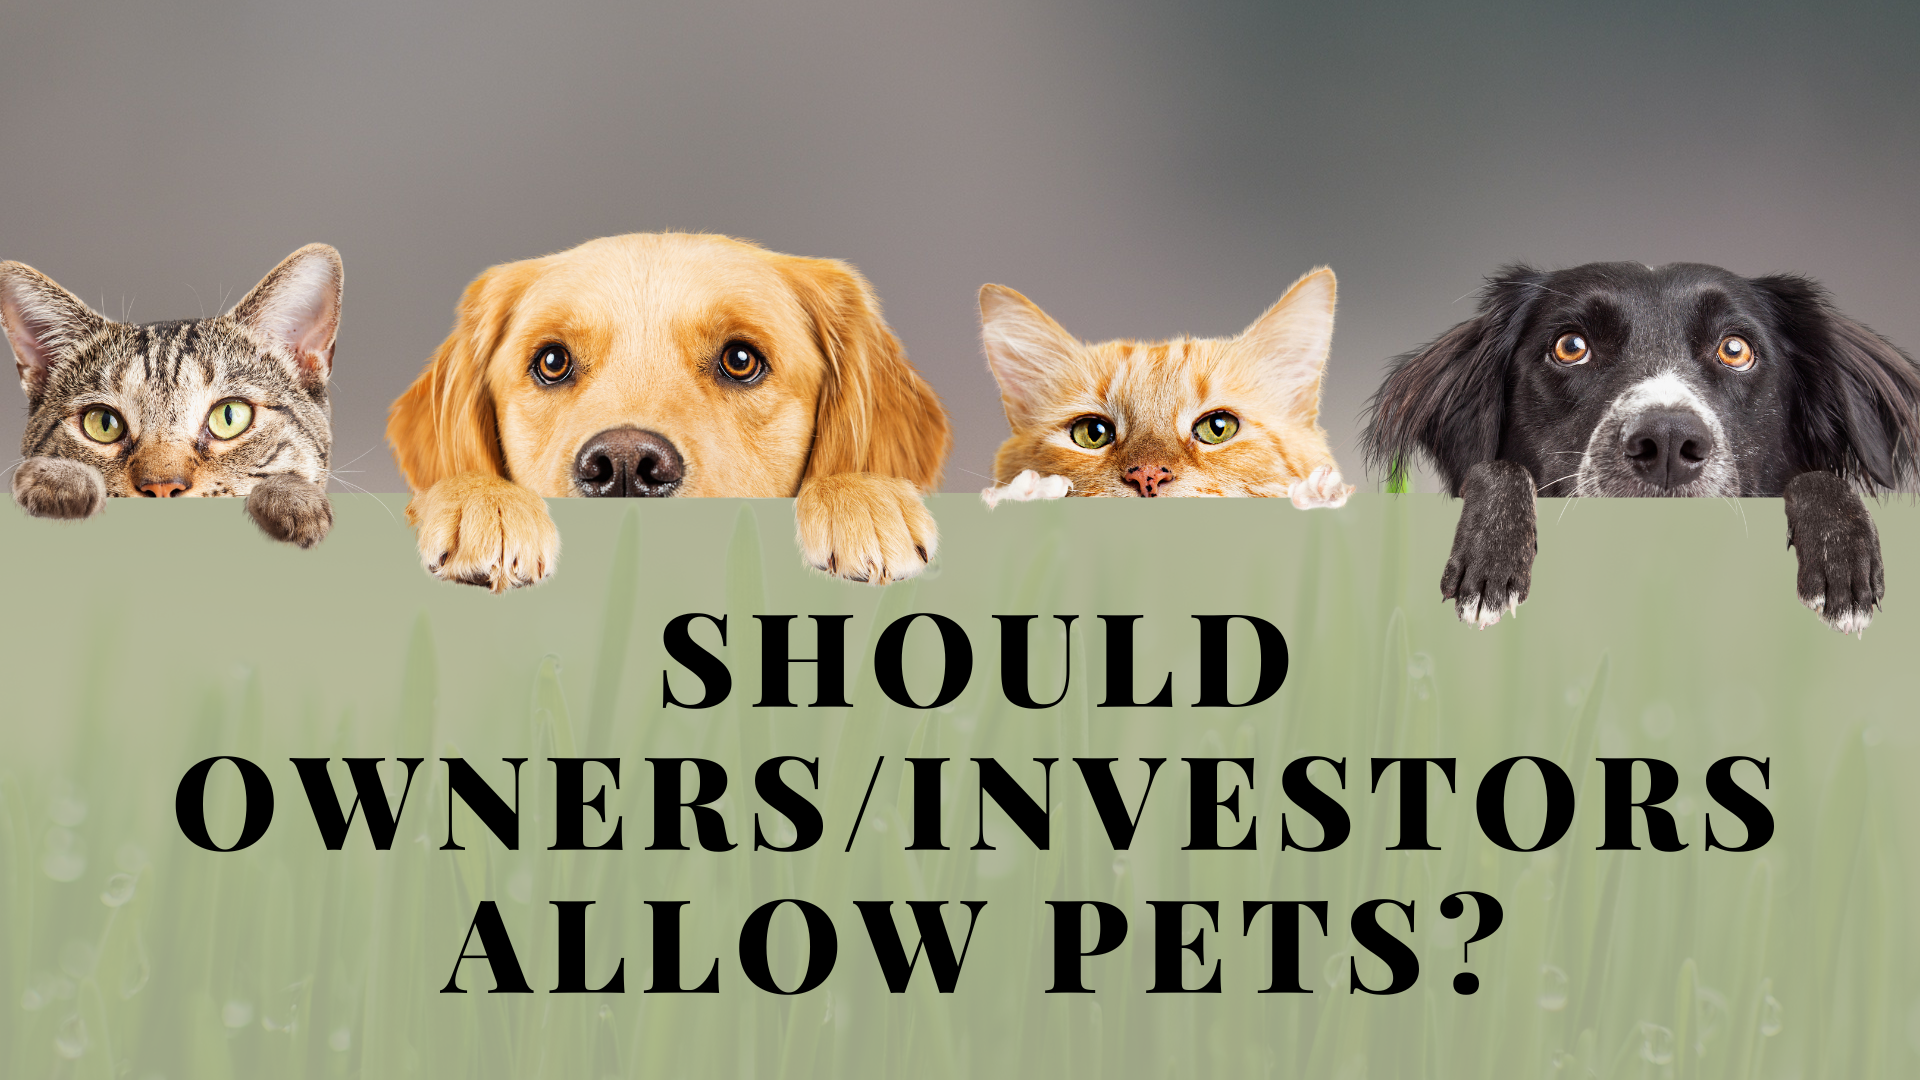 Should Owners/Investors Allow Pets?